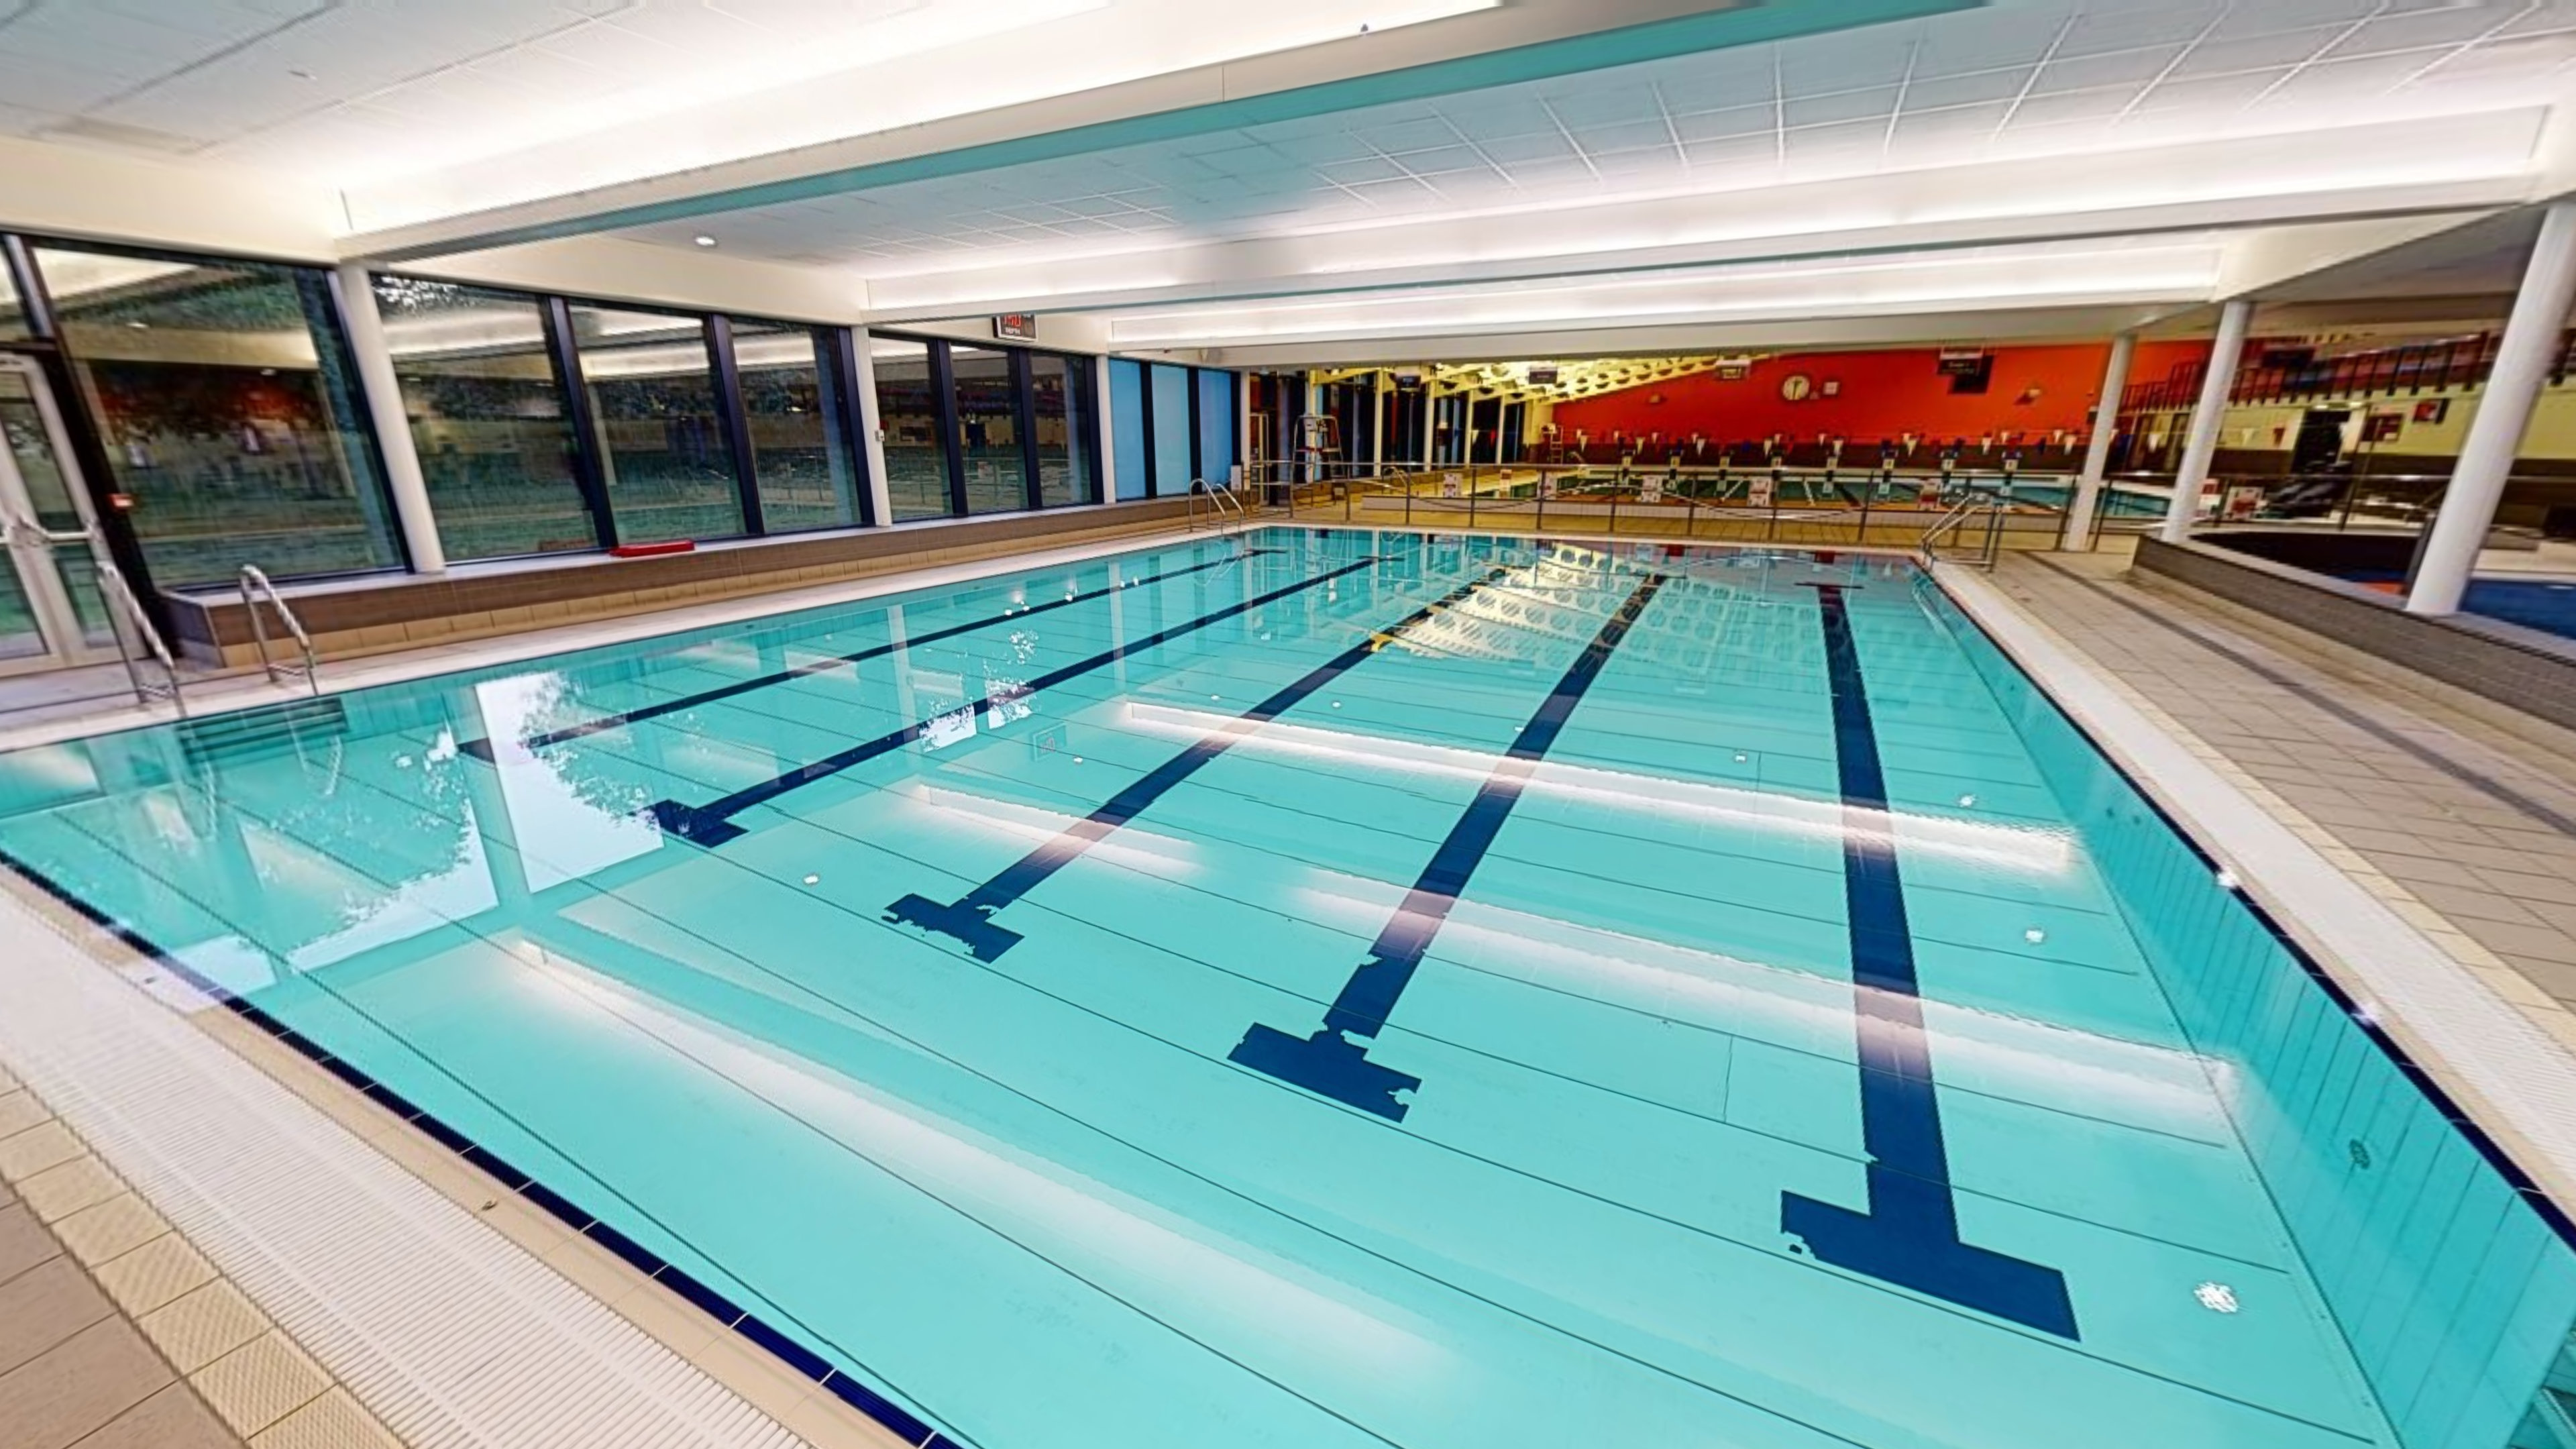 Swimming pool at Hinckley Leisure Centre Hinckley Leisure Centre Hinckley 01455 610011